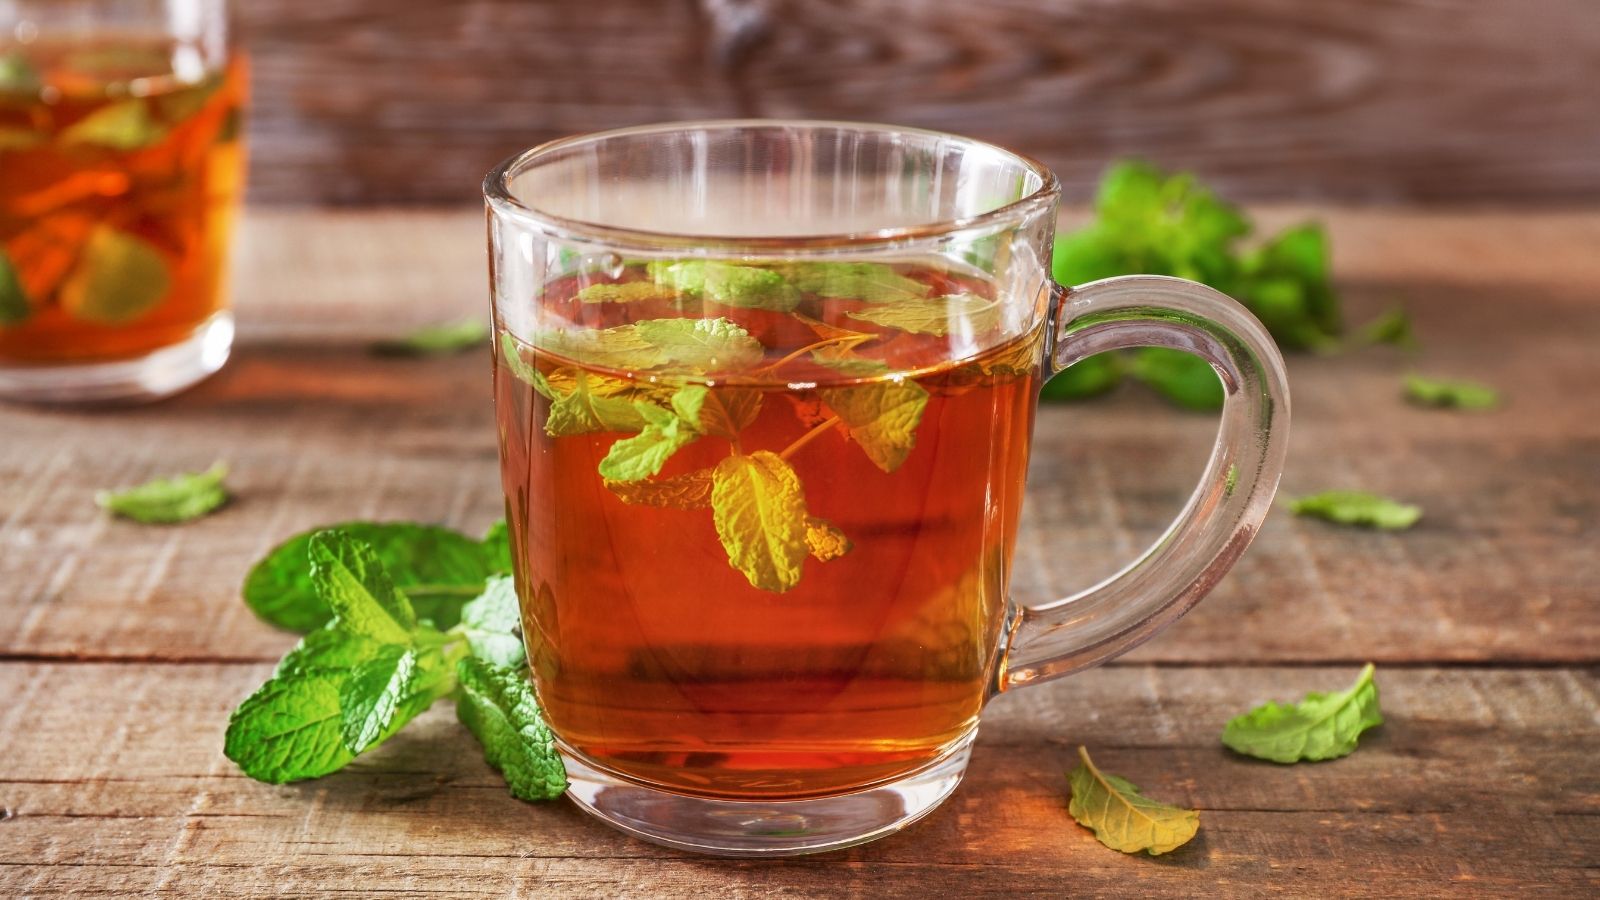 The immune-boosting properties of tea